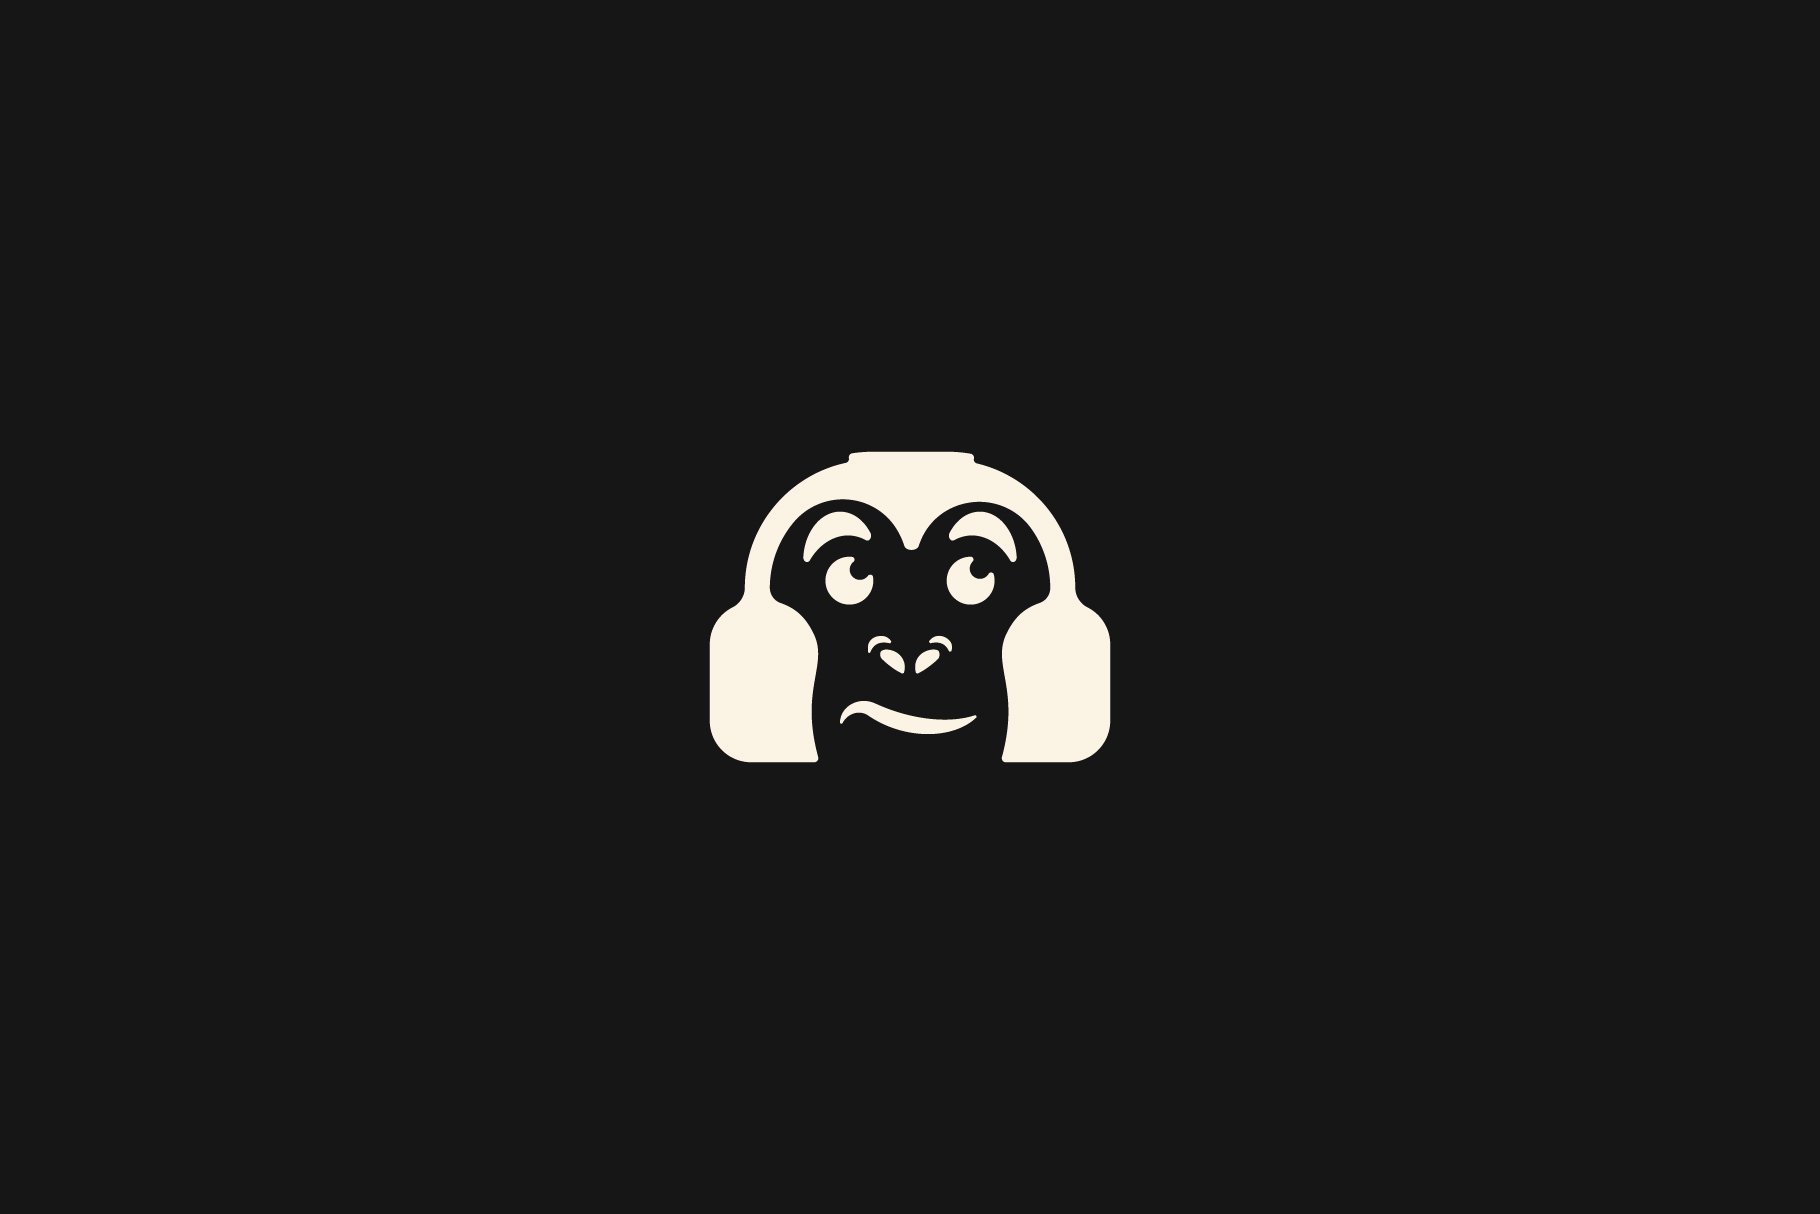 Monkey Headphone Logo Design Vector cover image.